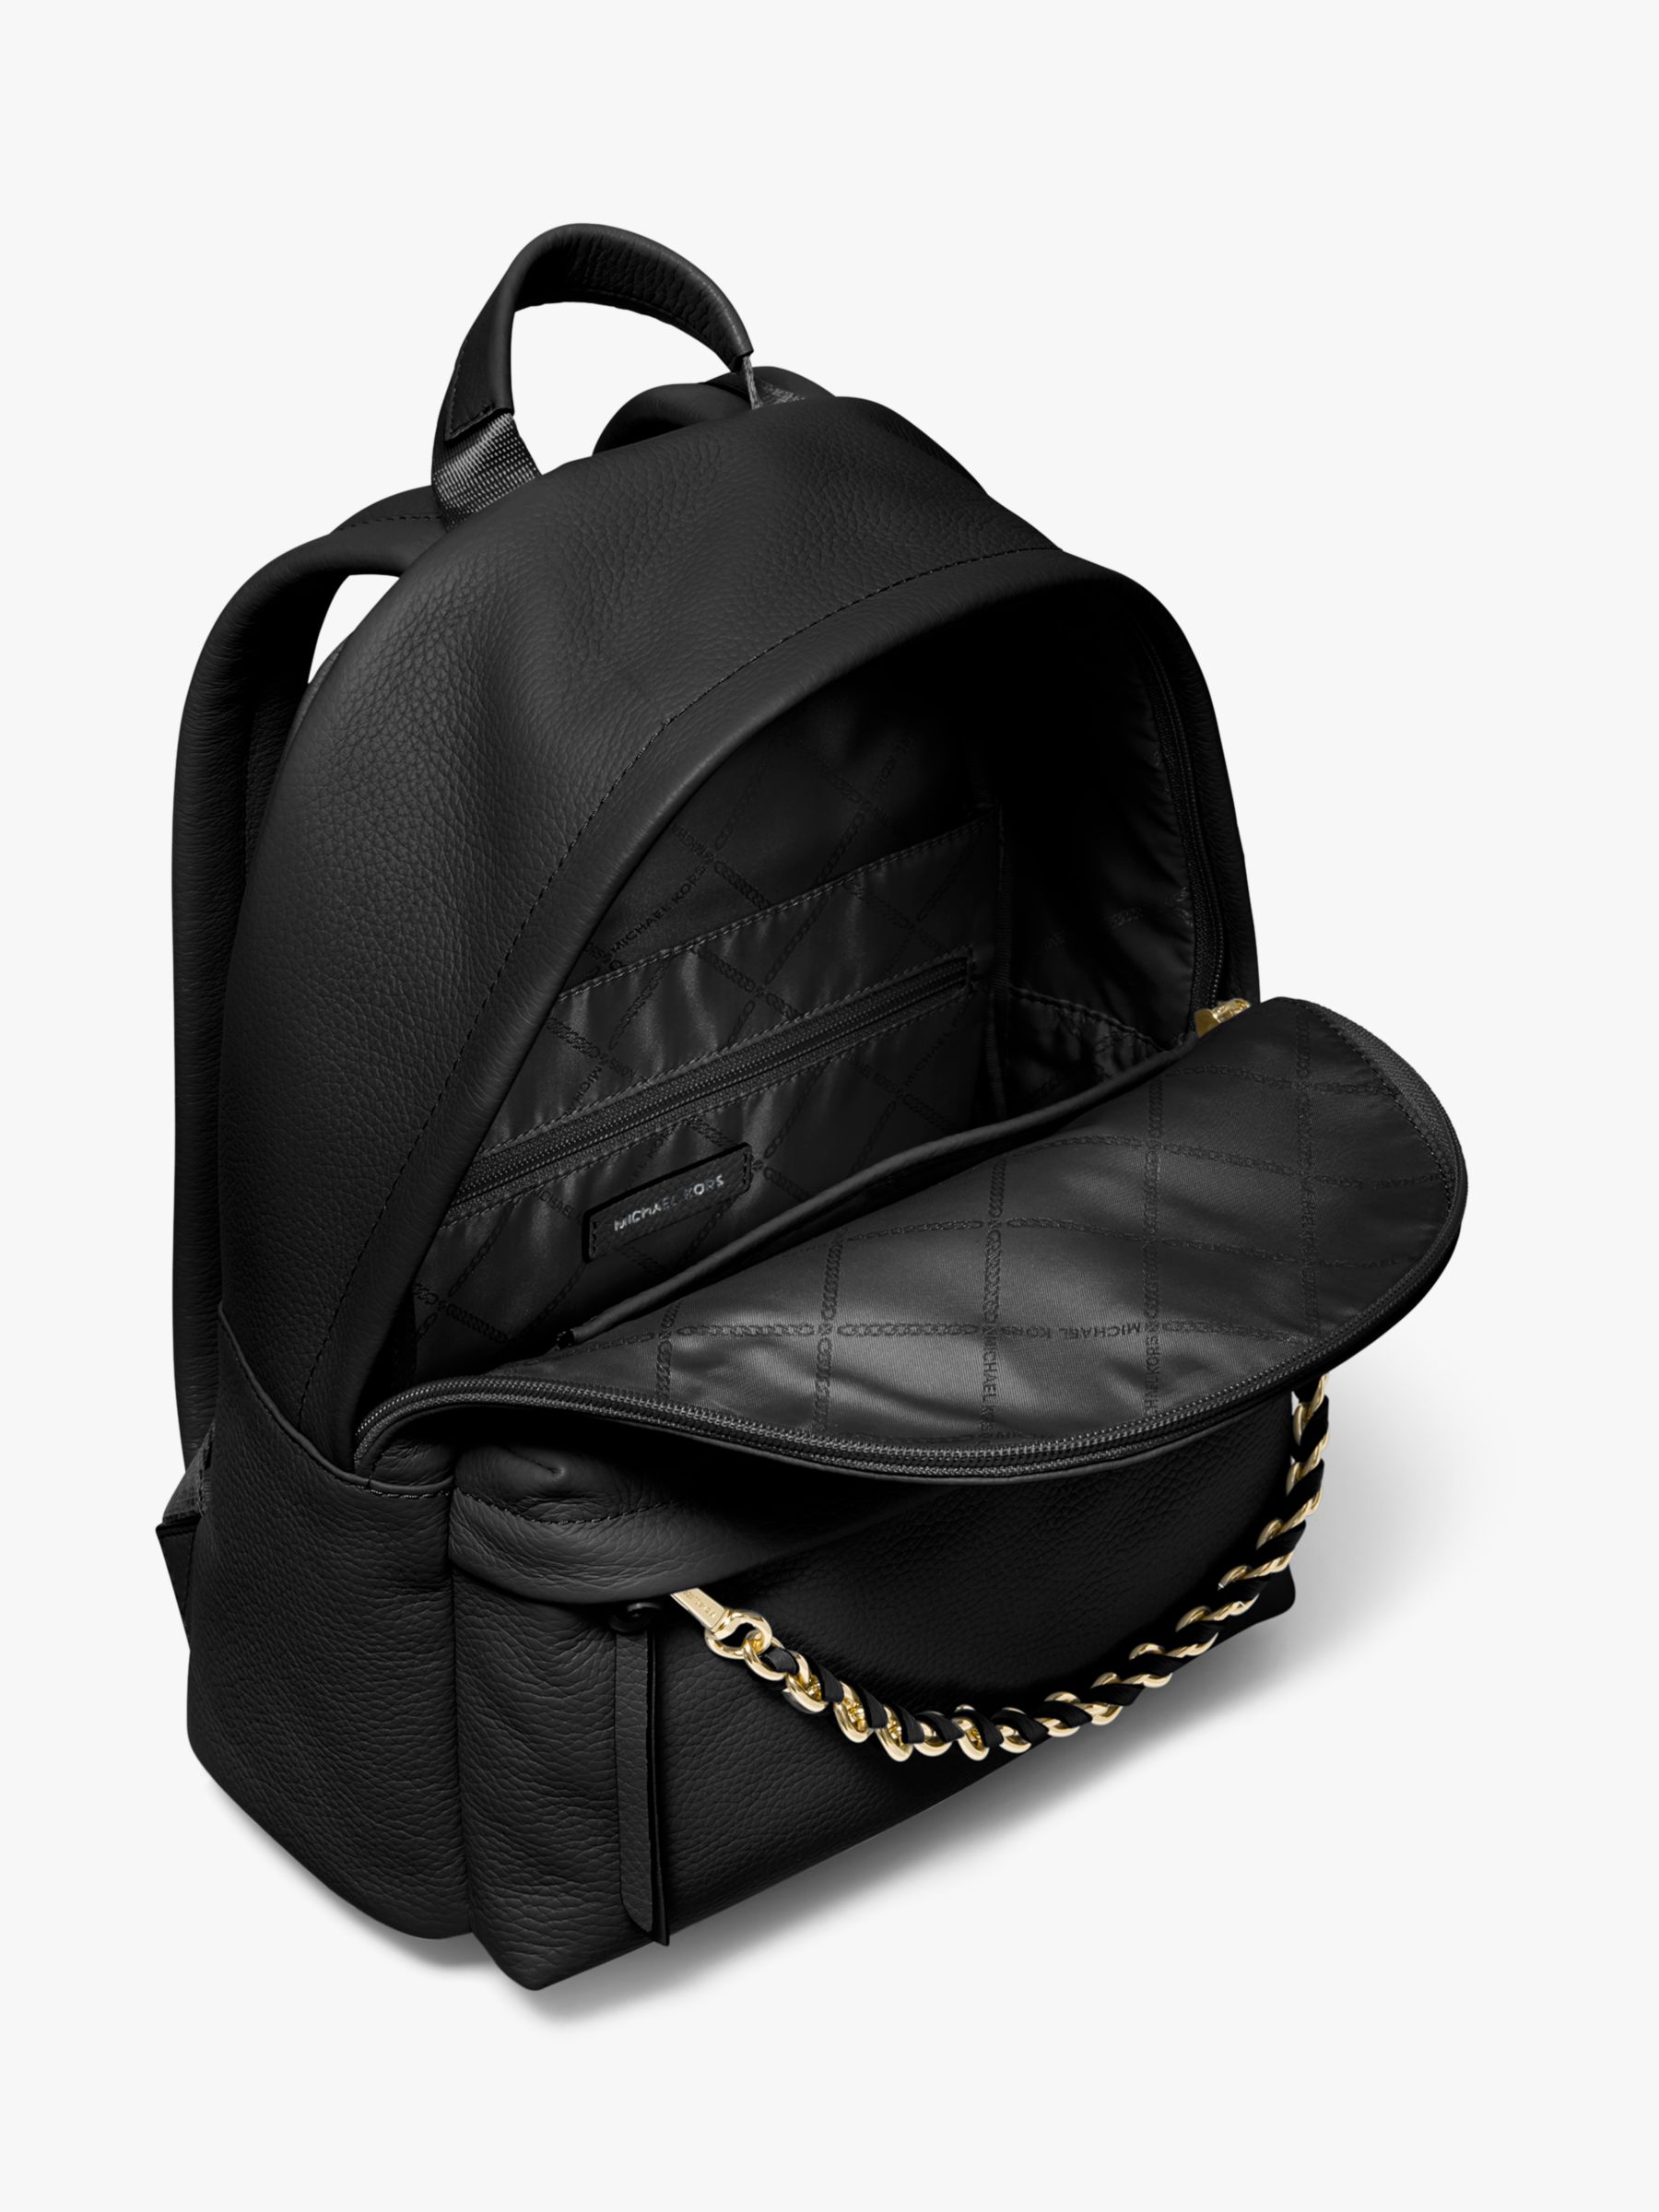 michael kors black leather backpack